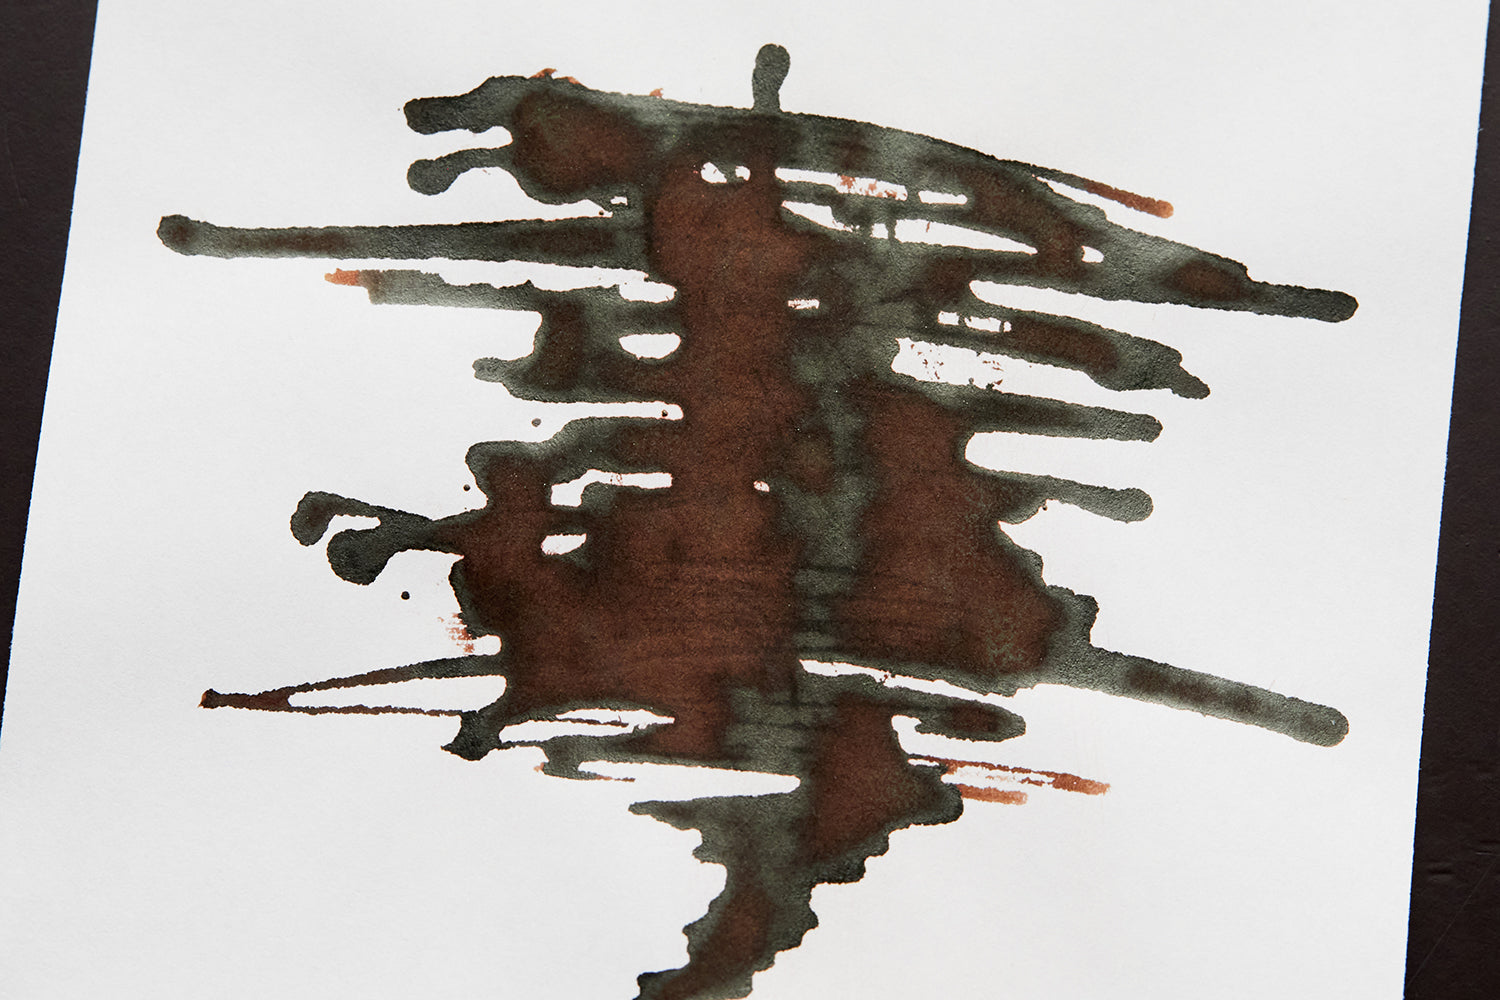 Diamine Chocolate Brown Fountain Pen Ink swab on white paper